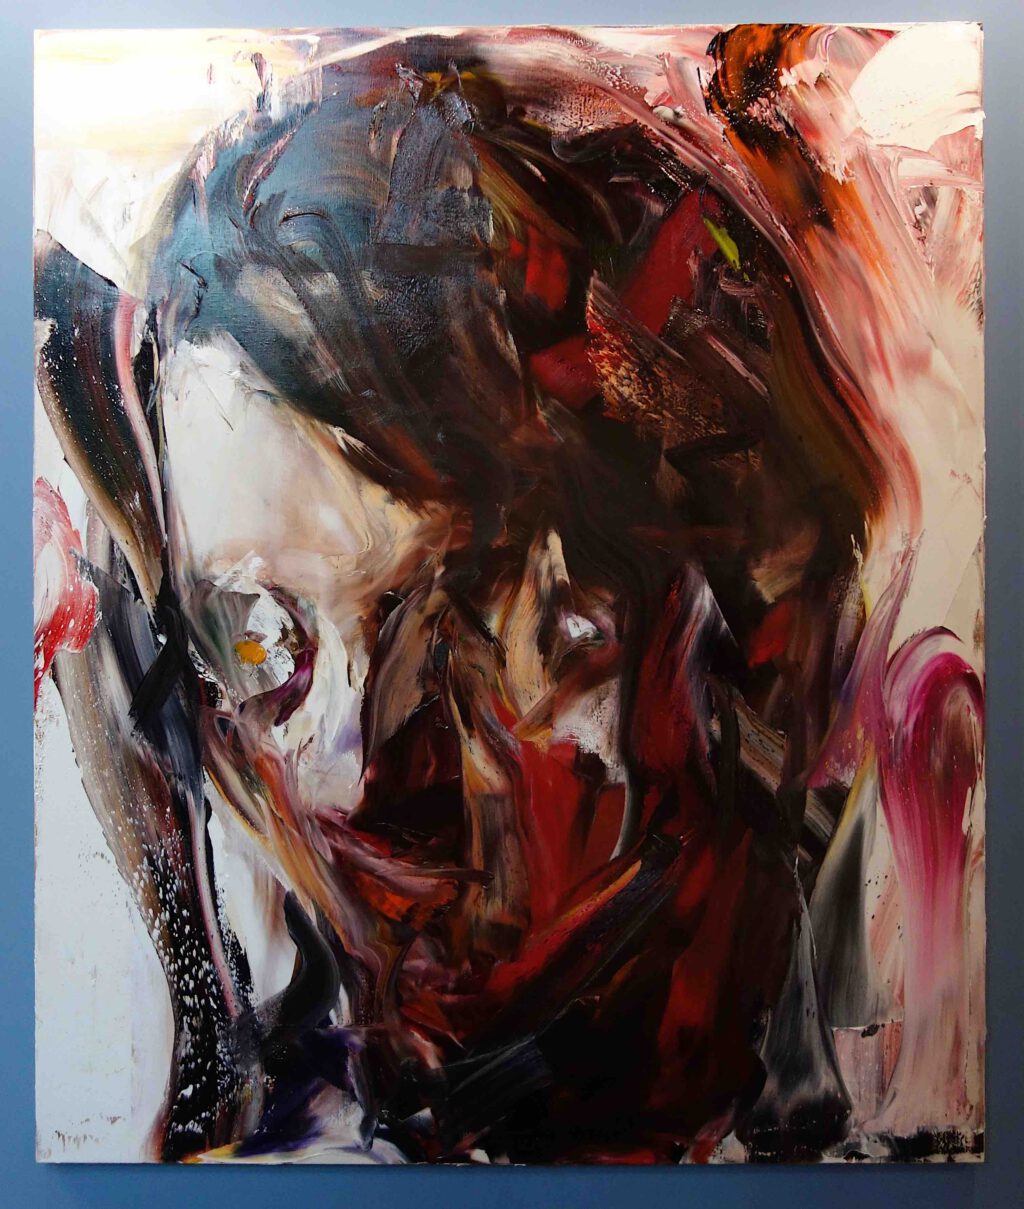 IDA Yukimasa 井田幸昌 “SUMI” 2022. Oil on canvas, 194 x 162 cm. 120.000 US$ @ Mariane Ibrahim , Art Basel Switzerland 2022